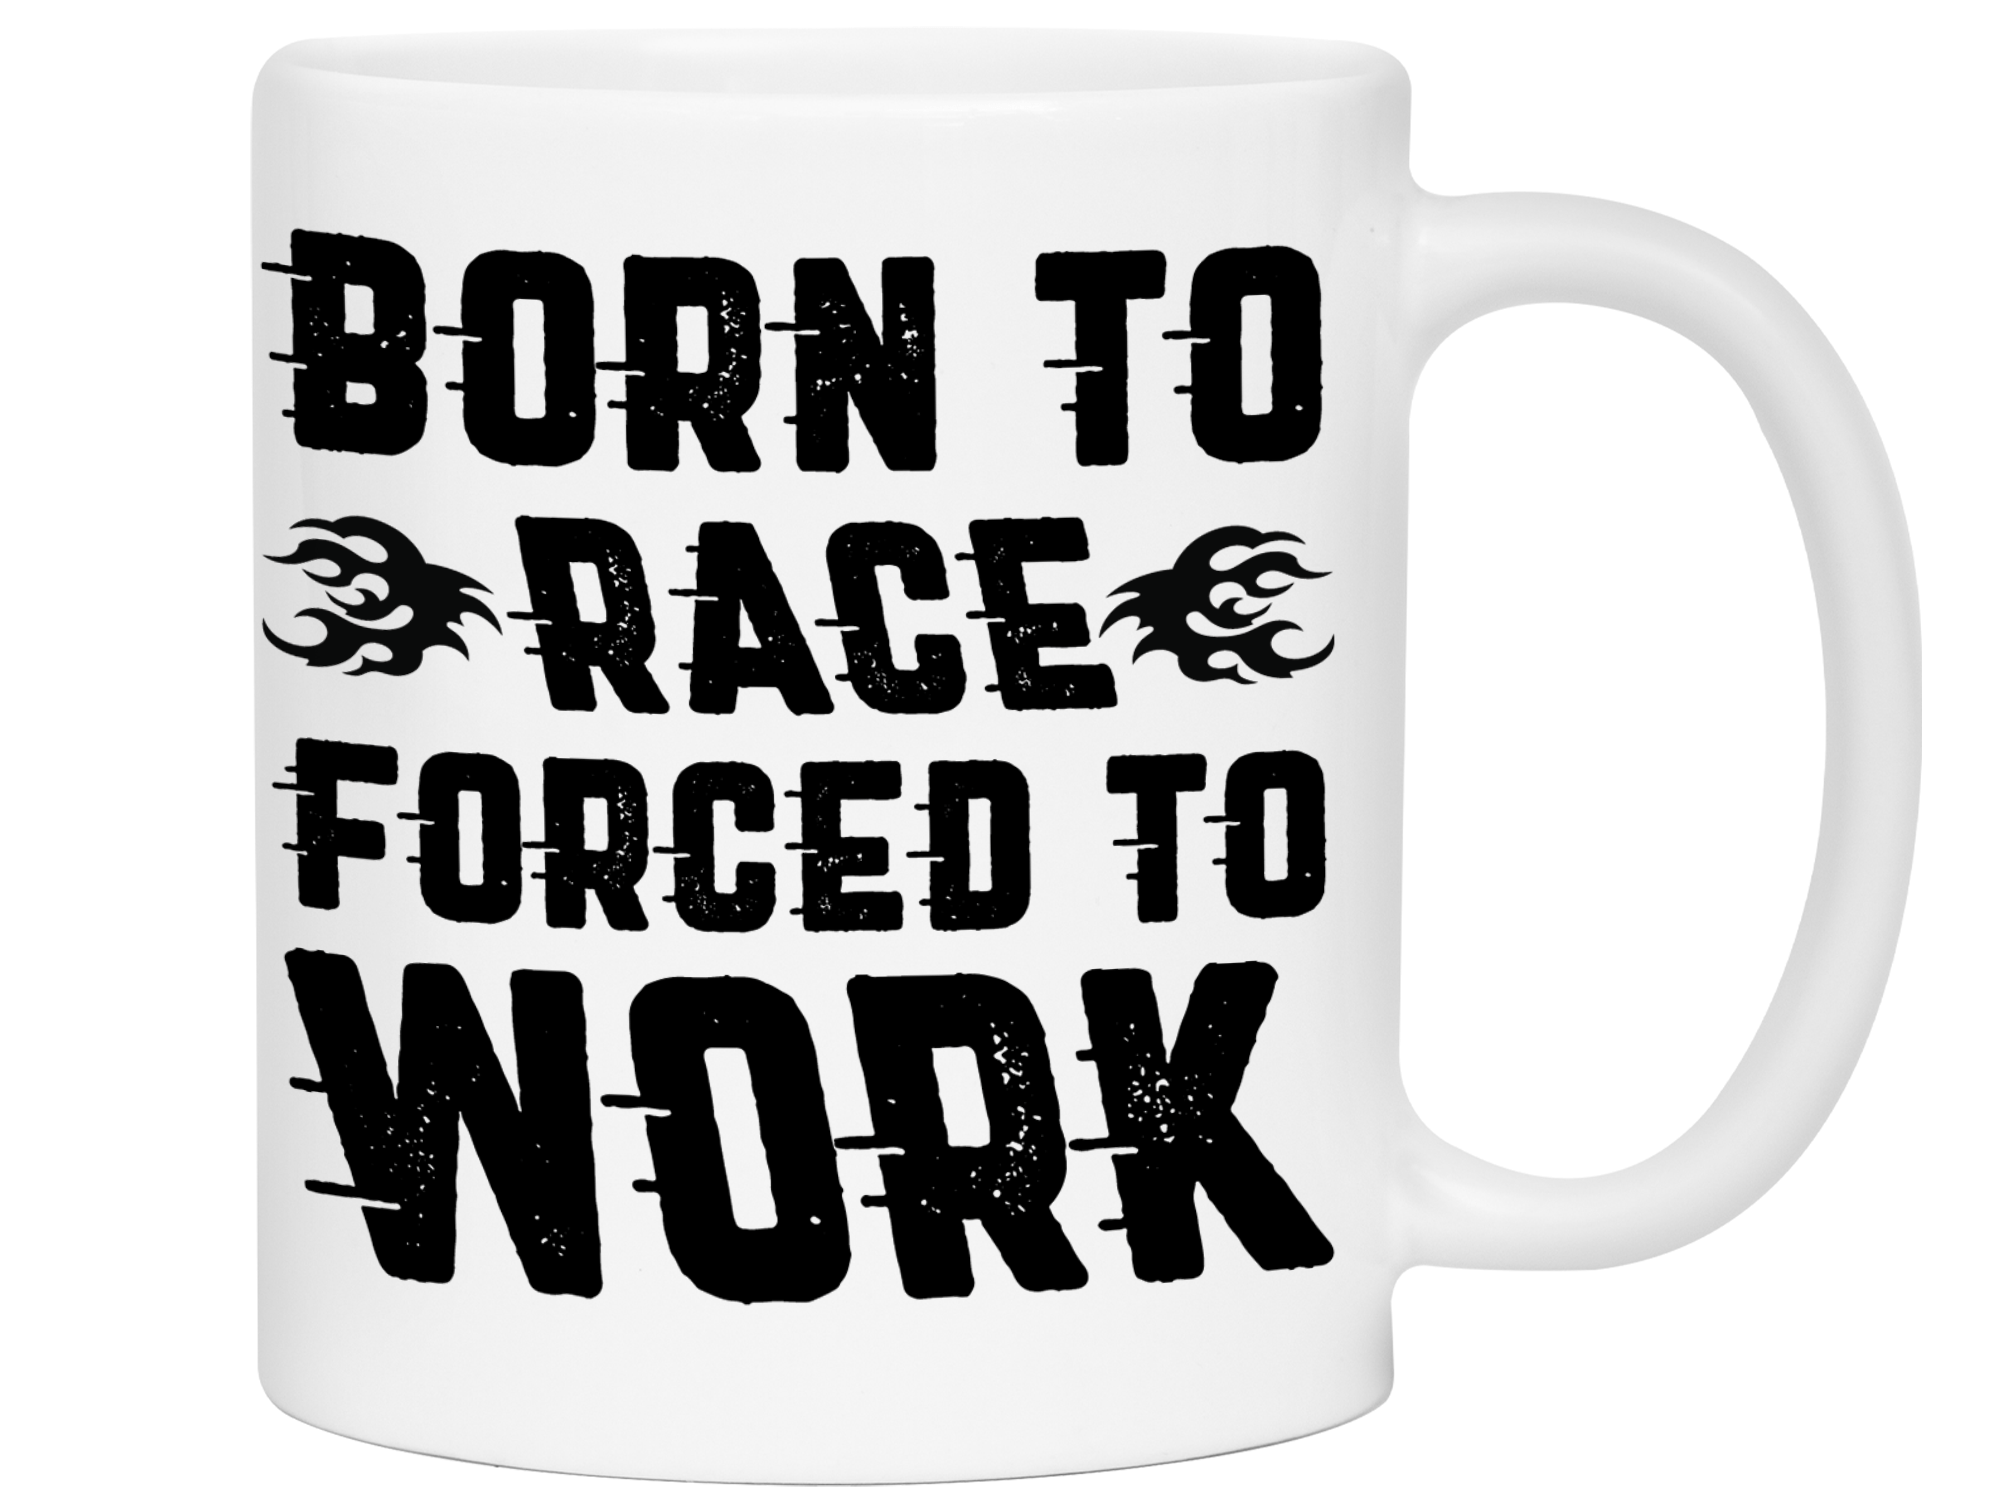 Born to Race Forced To Work - Funny Car Racing Mug - Funny Coffee Mug for Car Racers - Racing Gifts - Motocross - Sprint Car - Drag Car Racing